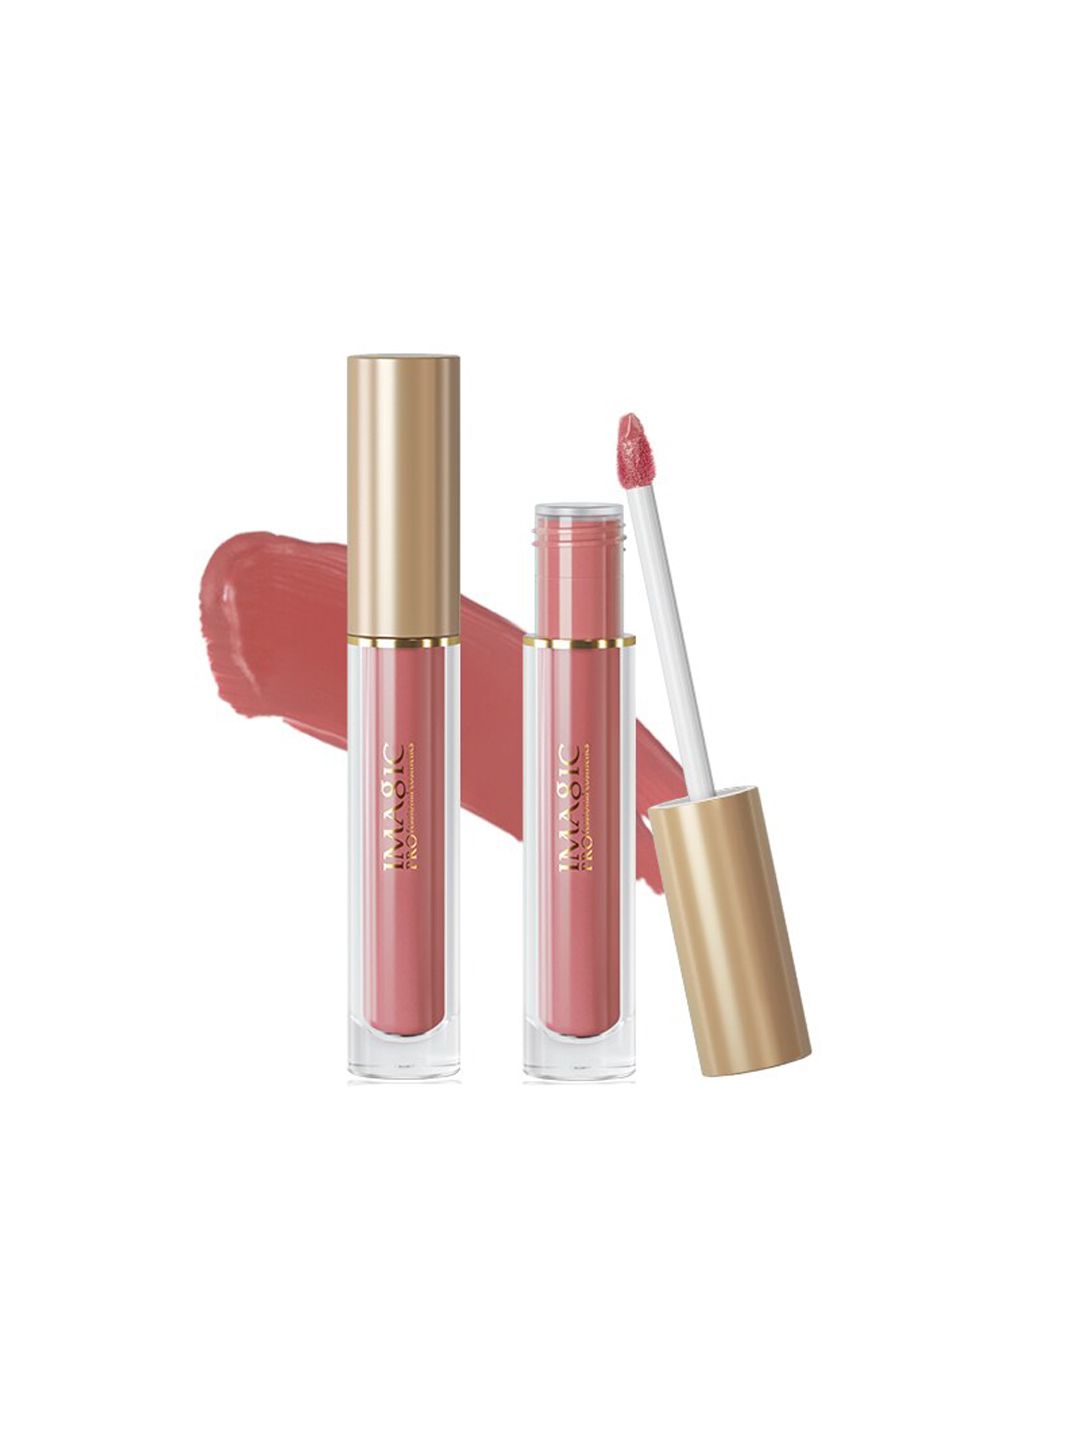 IMAGIC PROfessional Cosmetics Set of 5 Matte Liquid Lipstick 5 g Each -  Whisper 1 Price in India